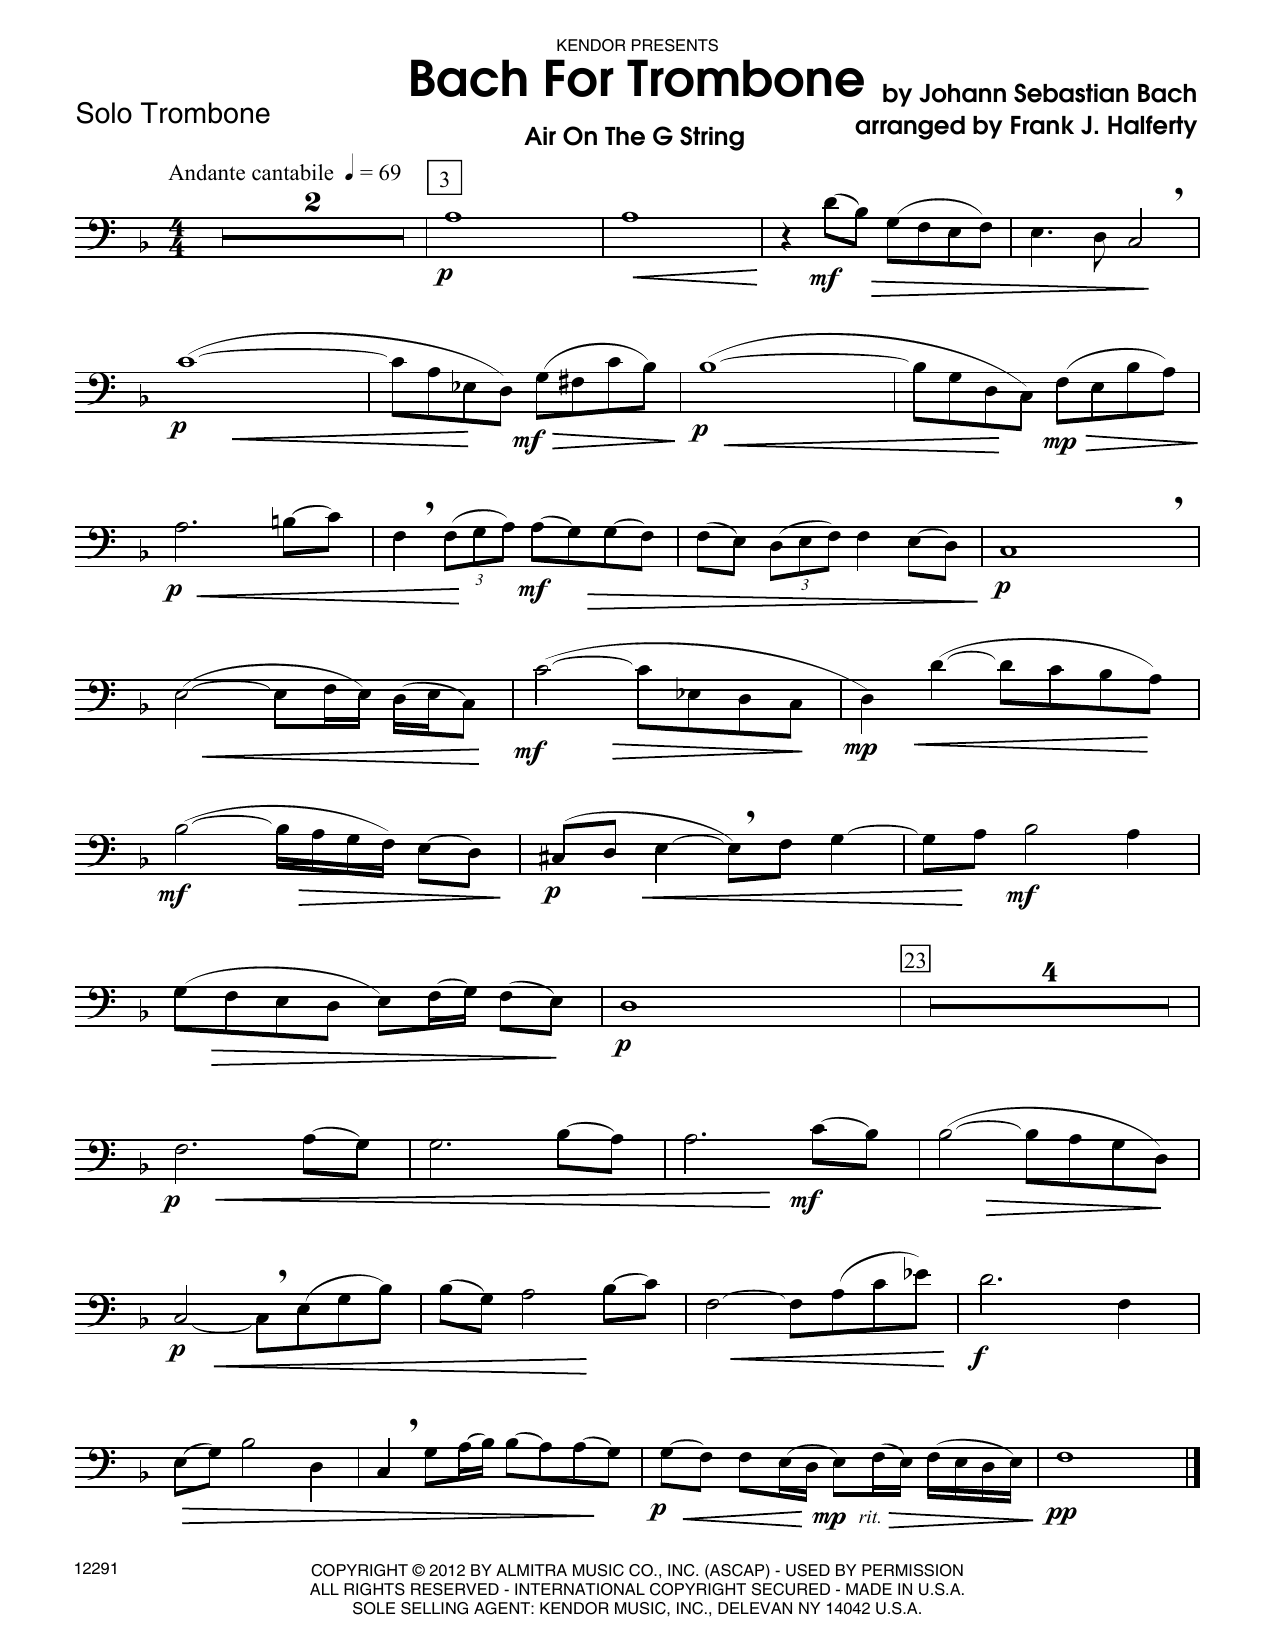 Download Frank J. Halferty Bach For Trombone - Trombone Sheet Music